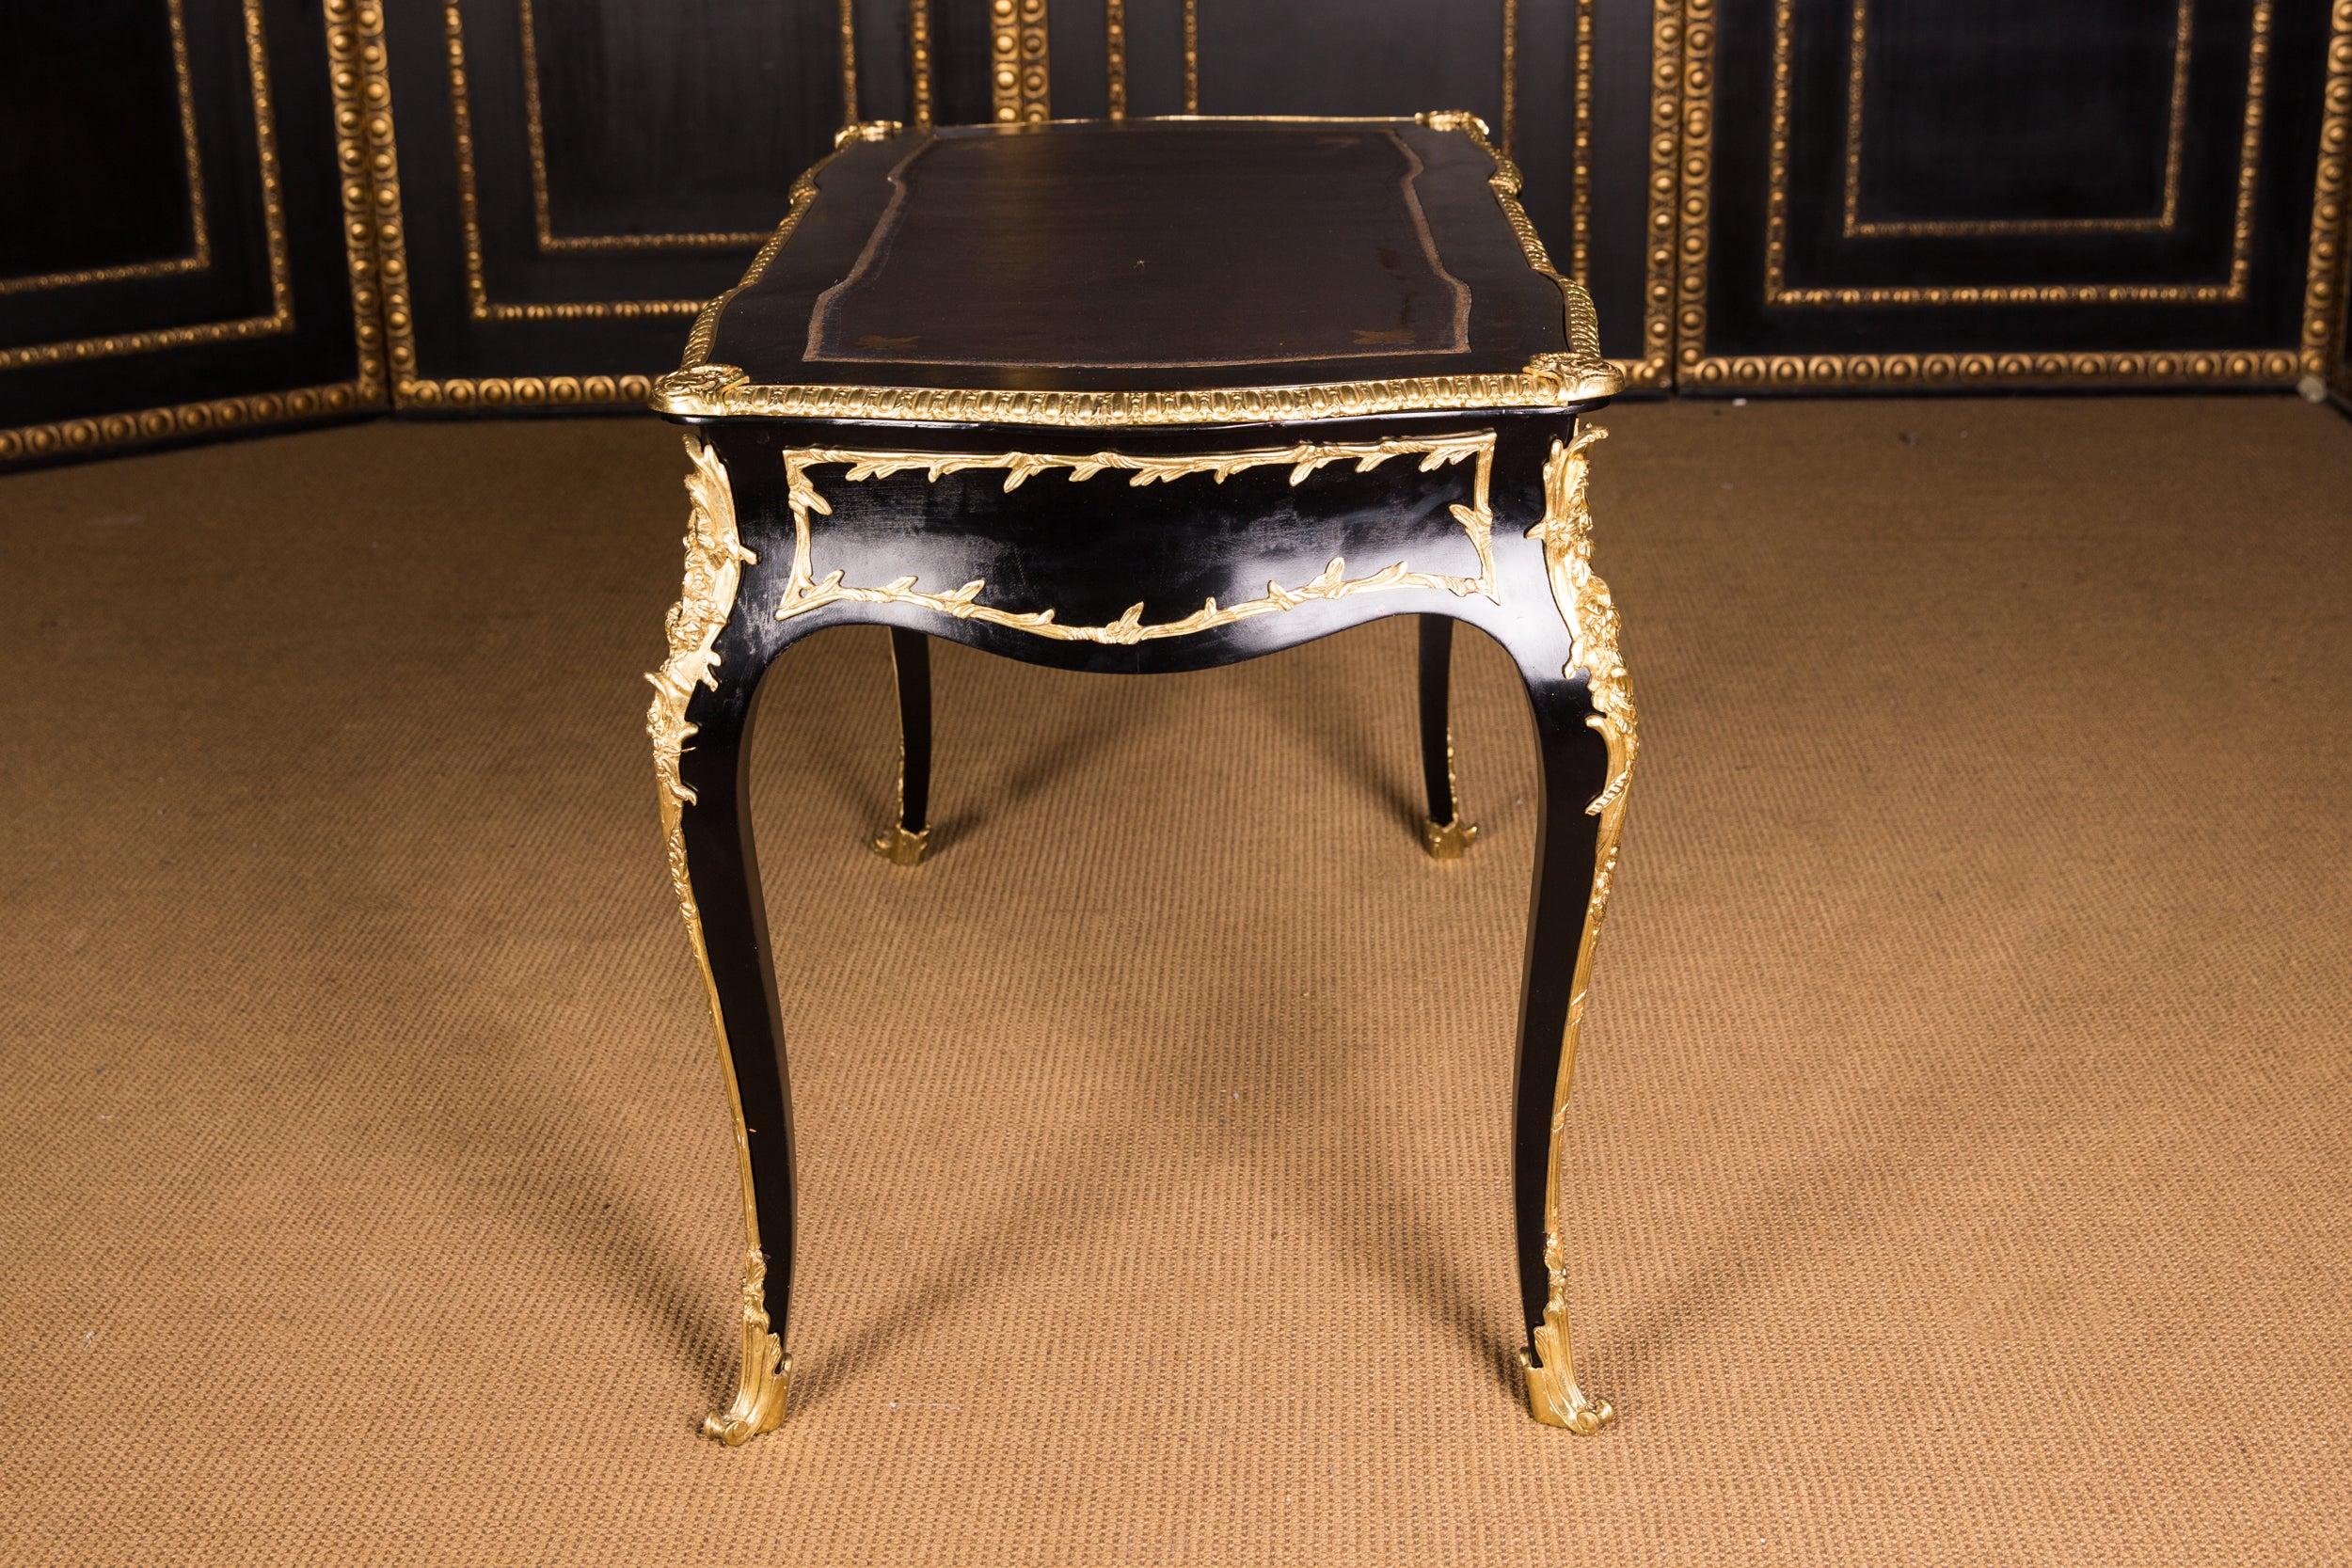 20th Century French Bureau Plat Desk in the Louis XV Style Black Ebonized Veneer For Sale 2